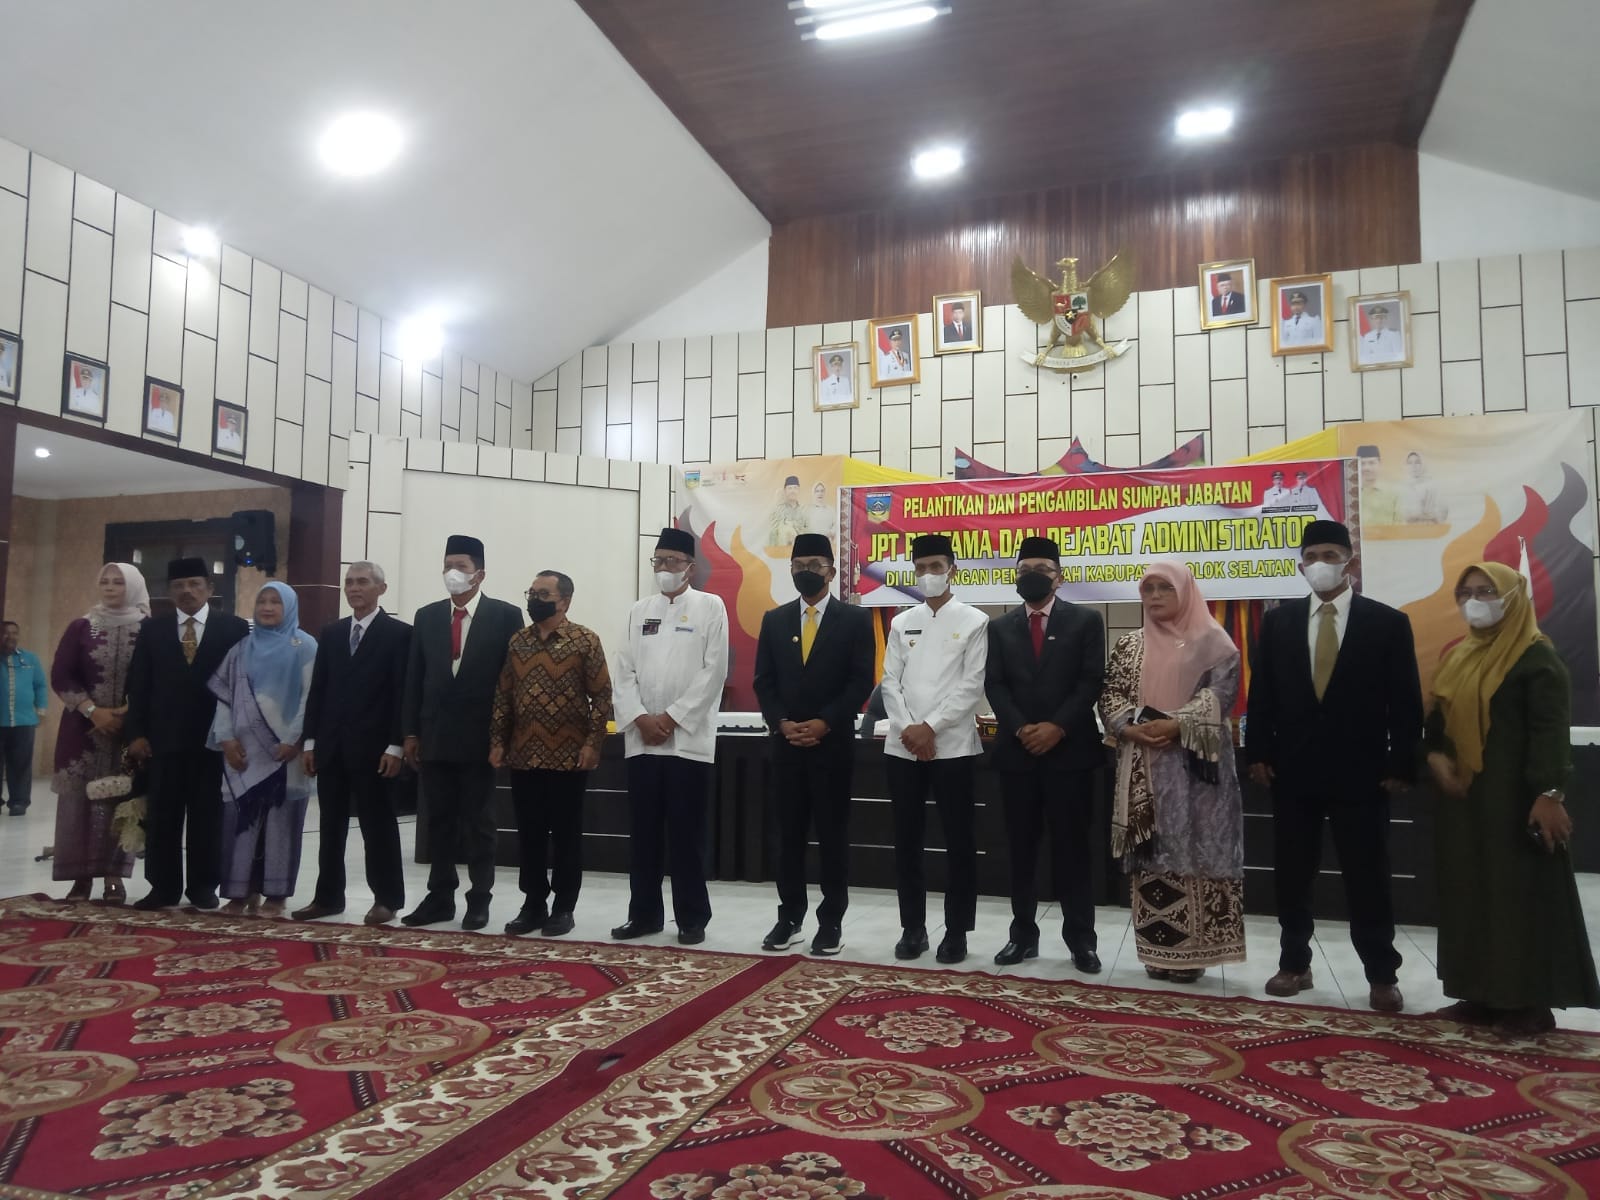 Bupati Solok Selatan Khairunnas melantik 5 orang Pejabat Pratama dan Pejabat Administrator di lingkungan Pemkab Solok Selatan, Jumat (31/12/2021).